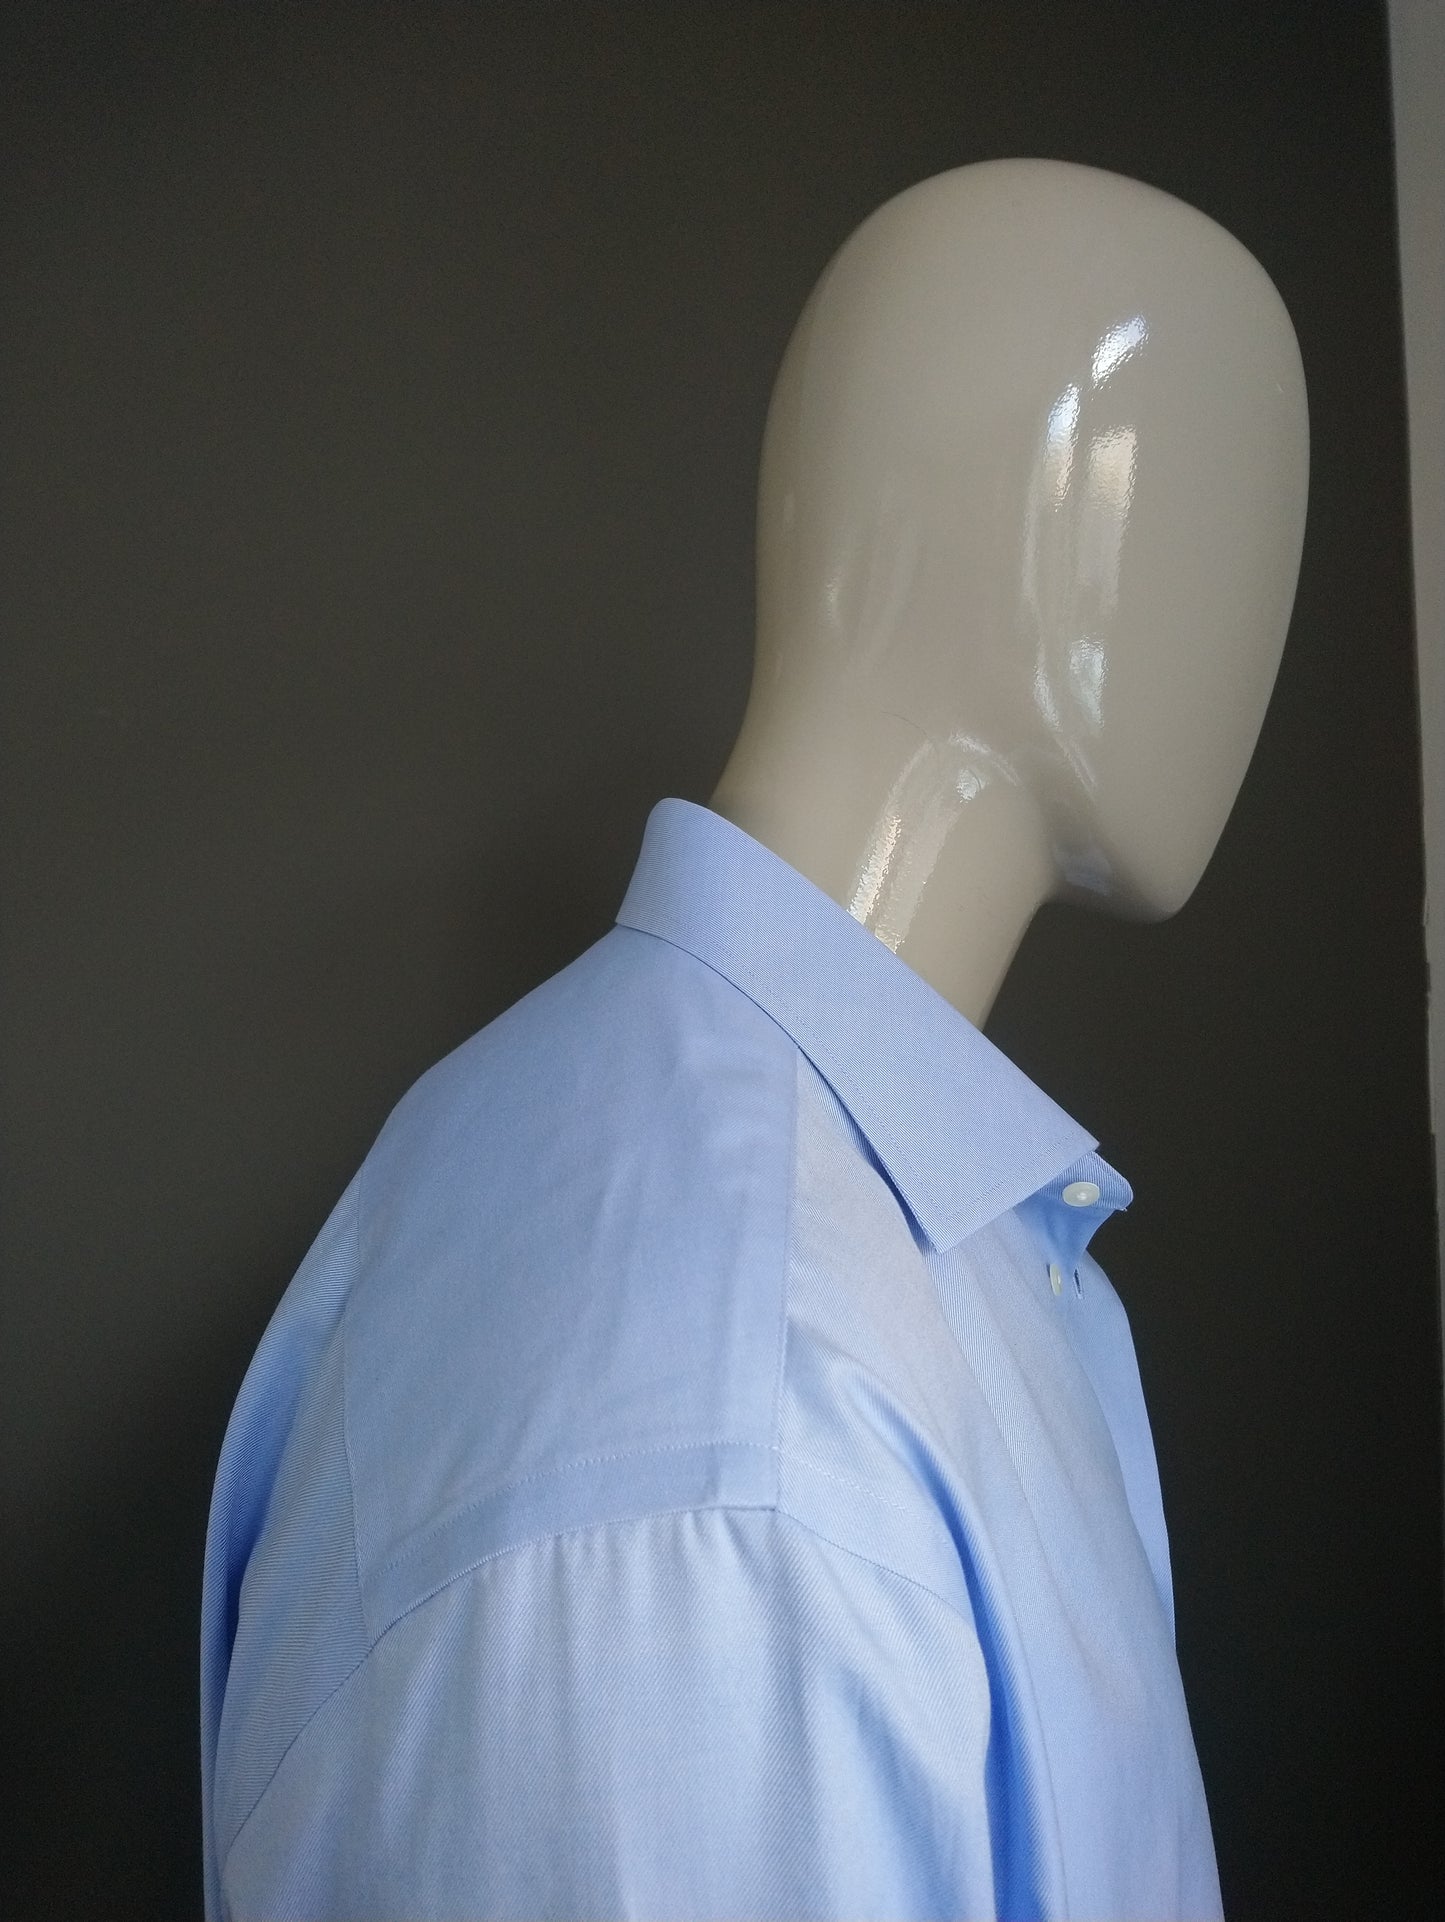 Thomas Maine shirt. Light blue colored. Size 46 / XXL / 2XL.